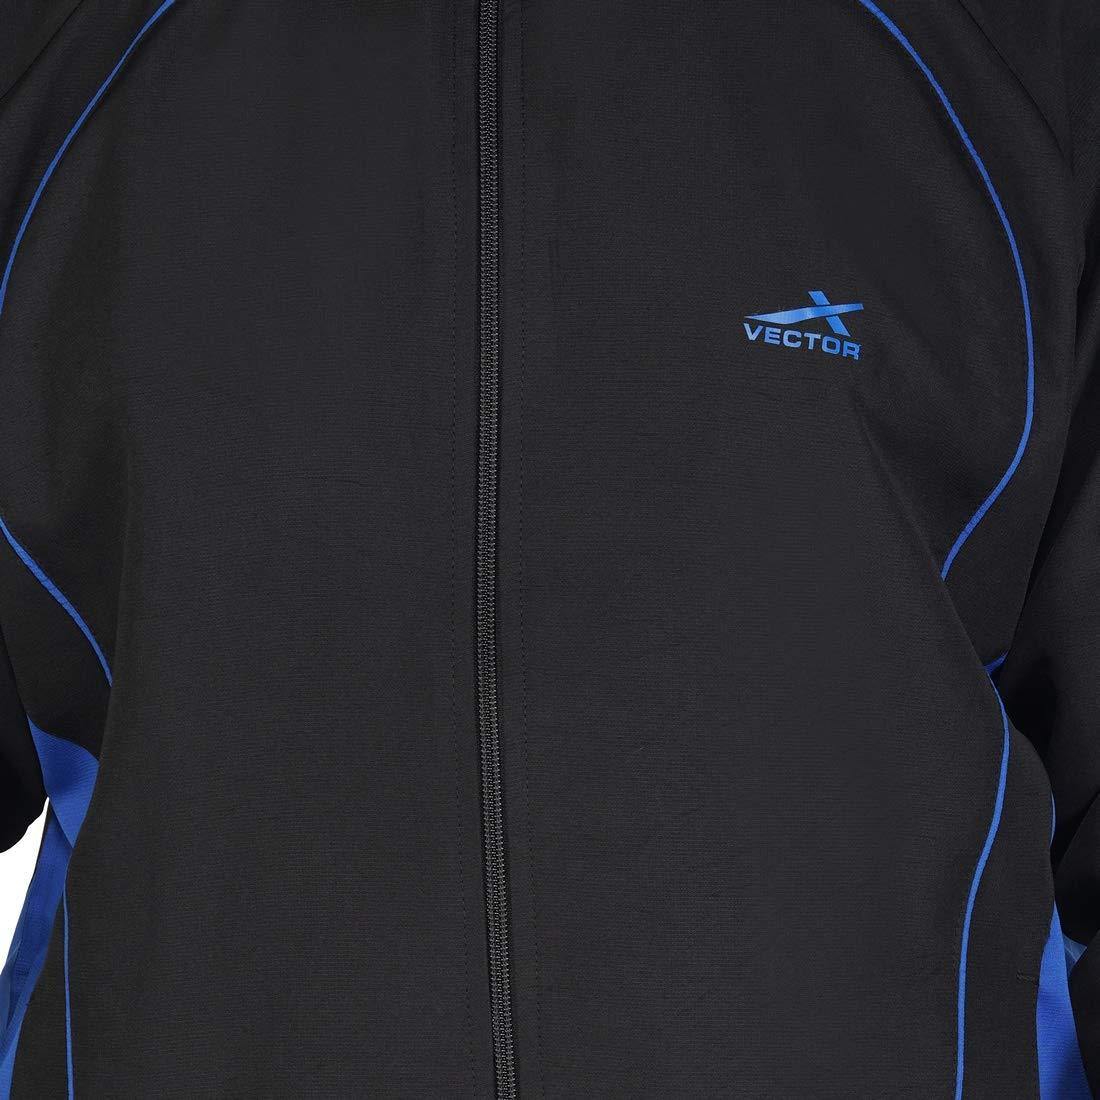 Vector X Synergy Track Suit for Men's, Navy - Best Price online Prokicksports.com